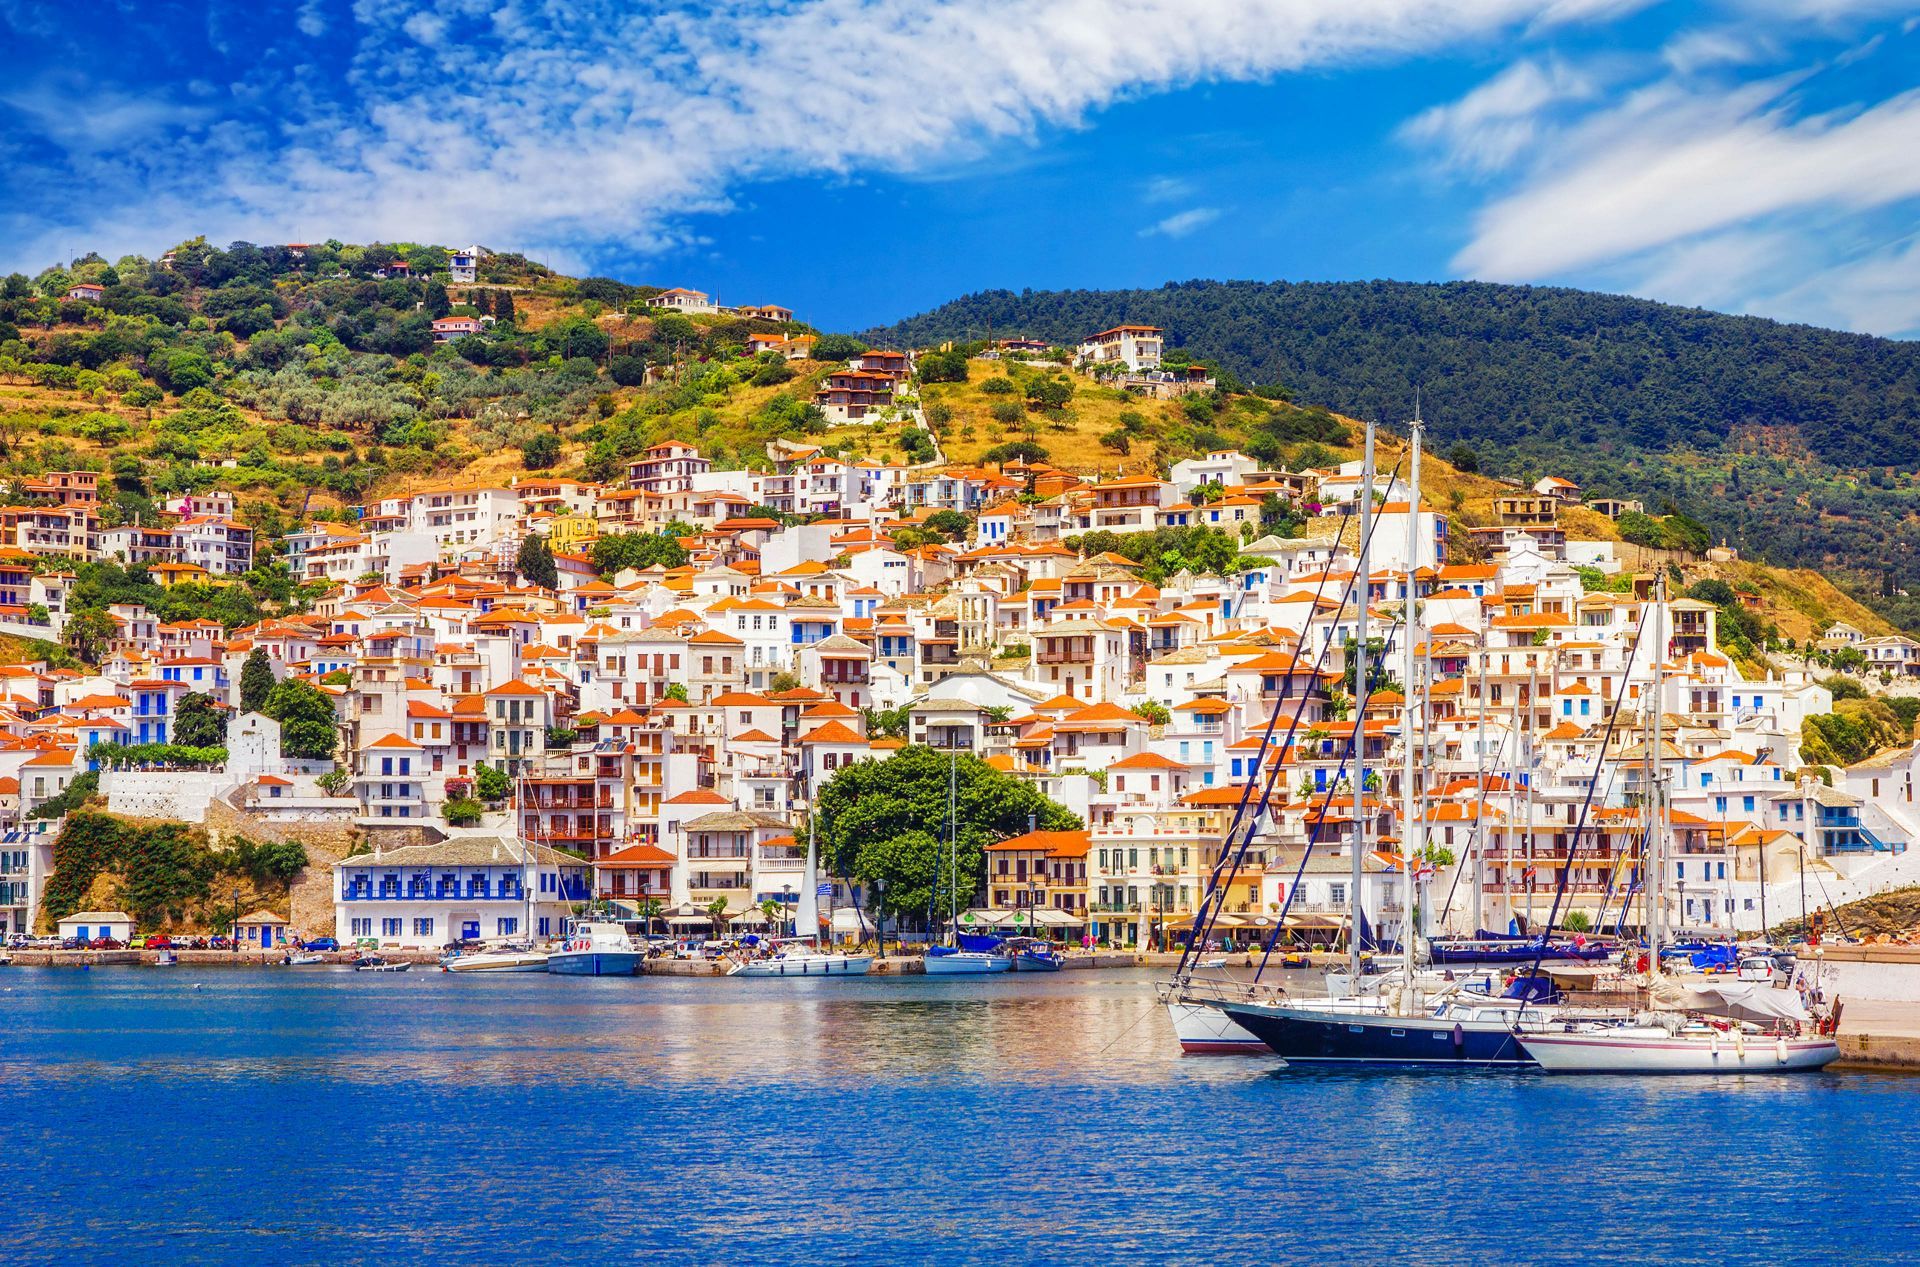 Skopelos Greece: The main Town of the island